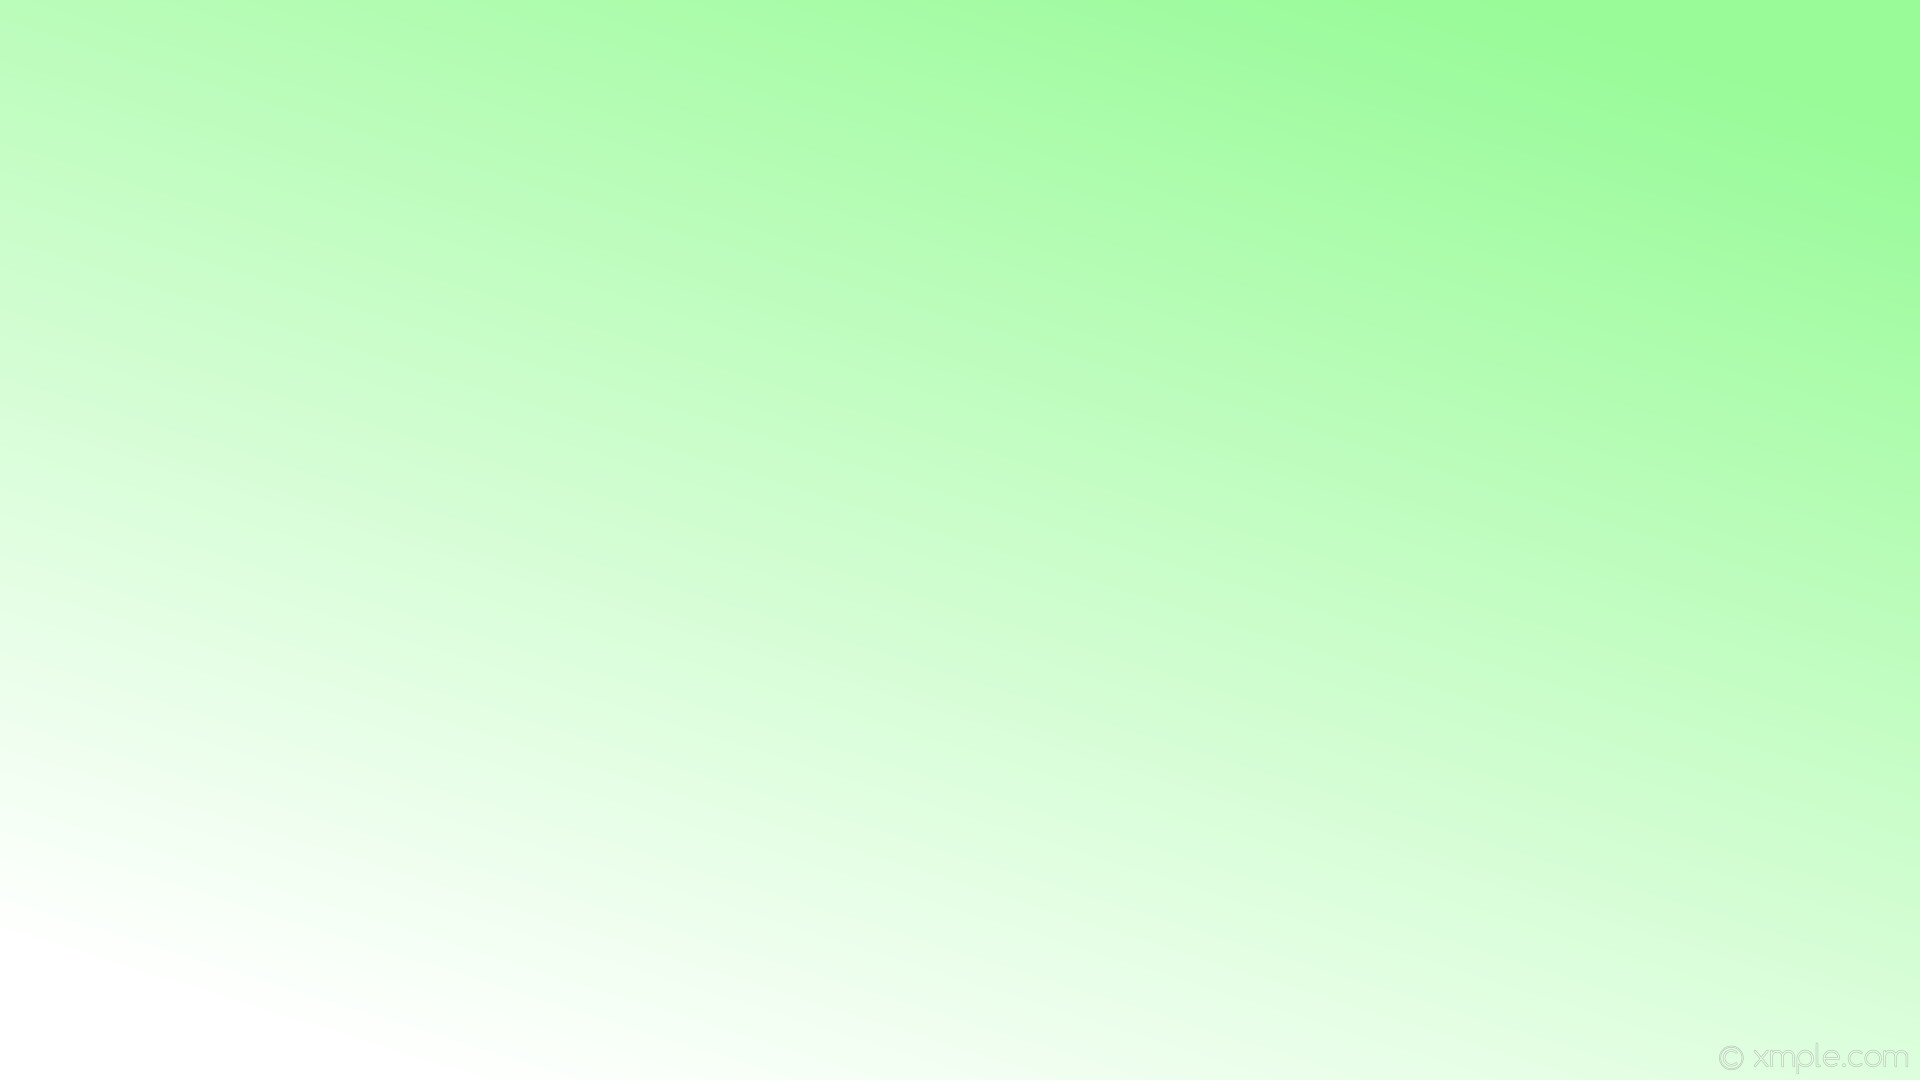 1920x1080 wallpaper linear green gradient white pale green #98fb98 #ffffff 45Â°